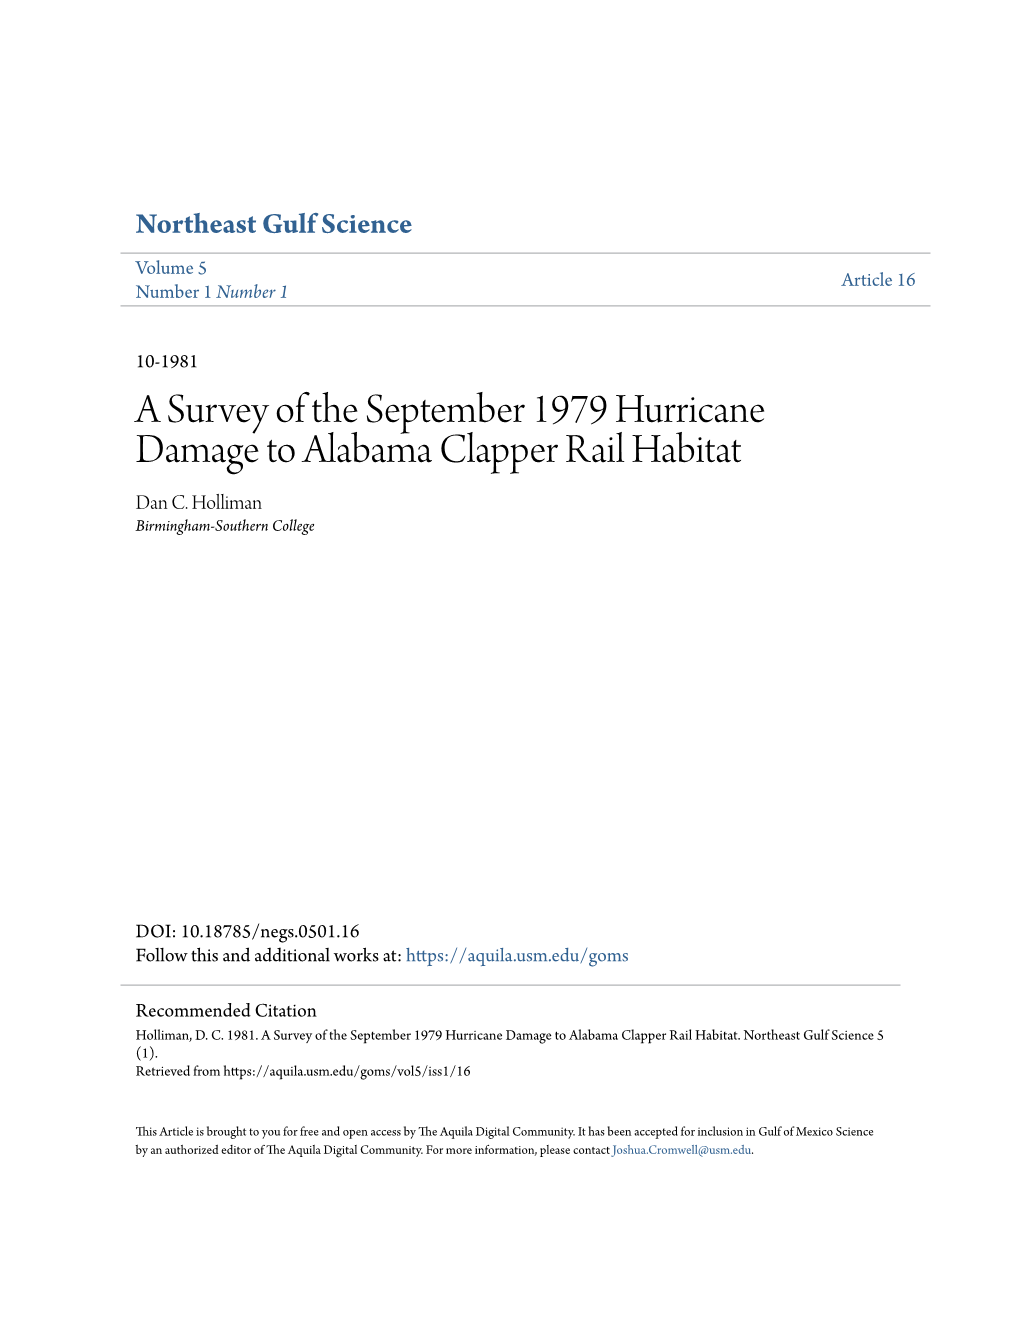 A Survey of the September 1979 Hurricane Damage to Alabama Clapper Rail Habitat Dan C